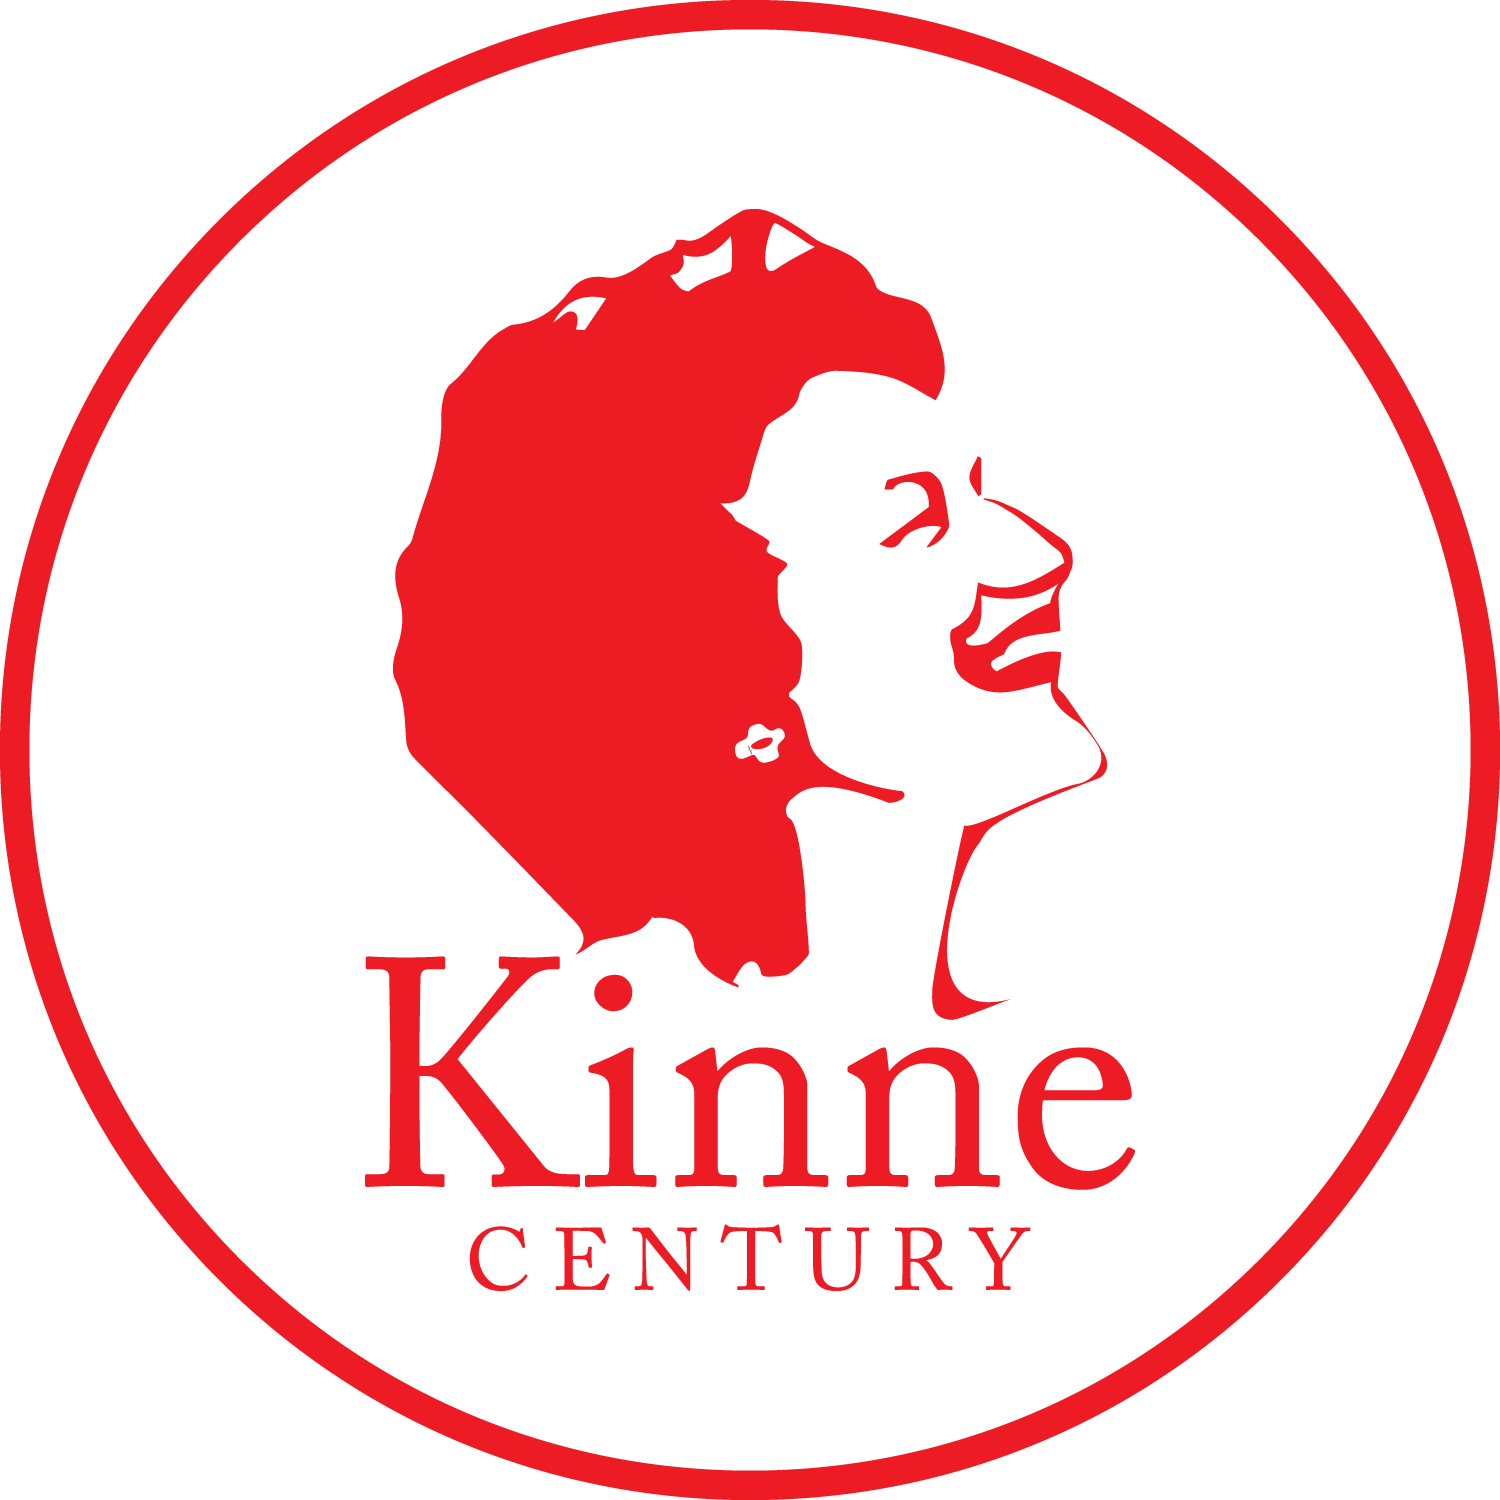 Kinne Century Logo